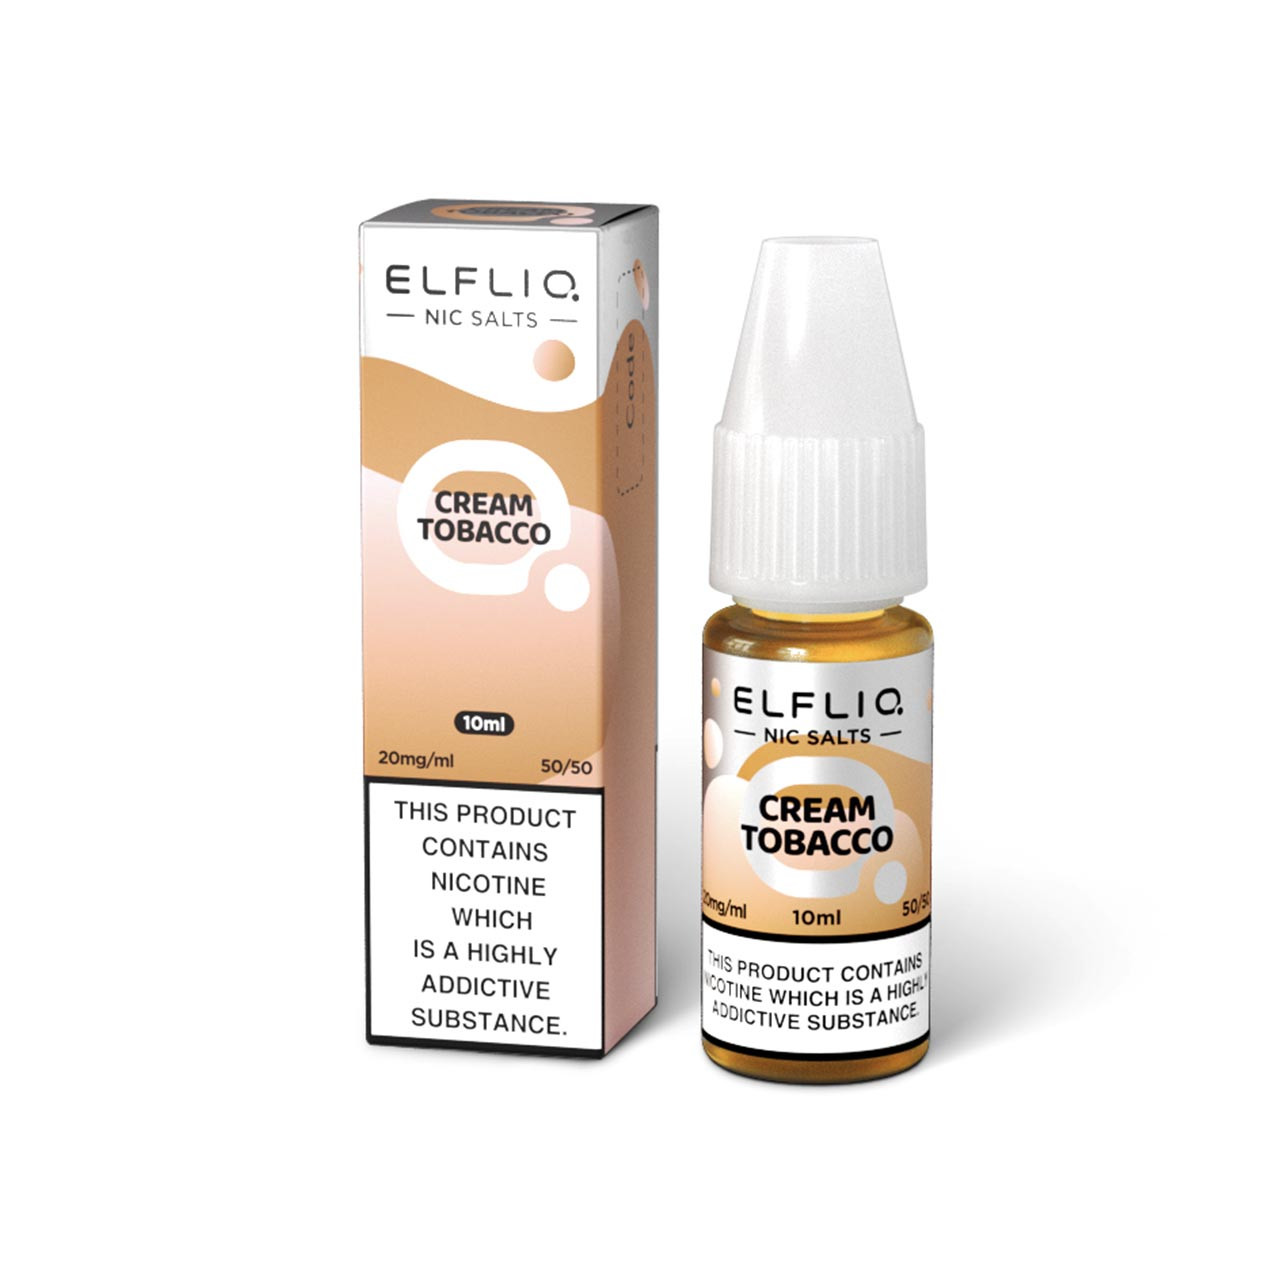 Elfliq Cream Tobacco 10ml E-Liquid from Elf Bar